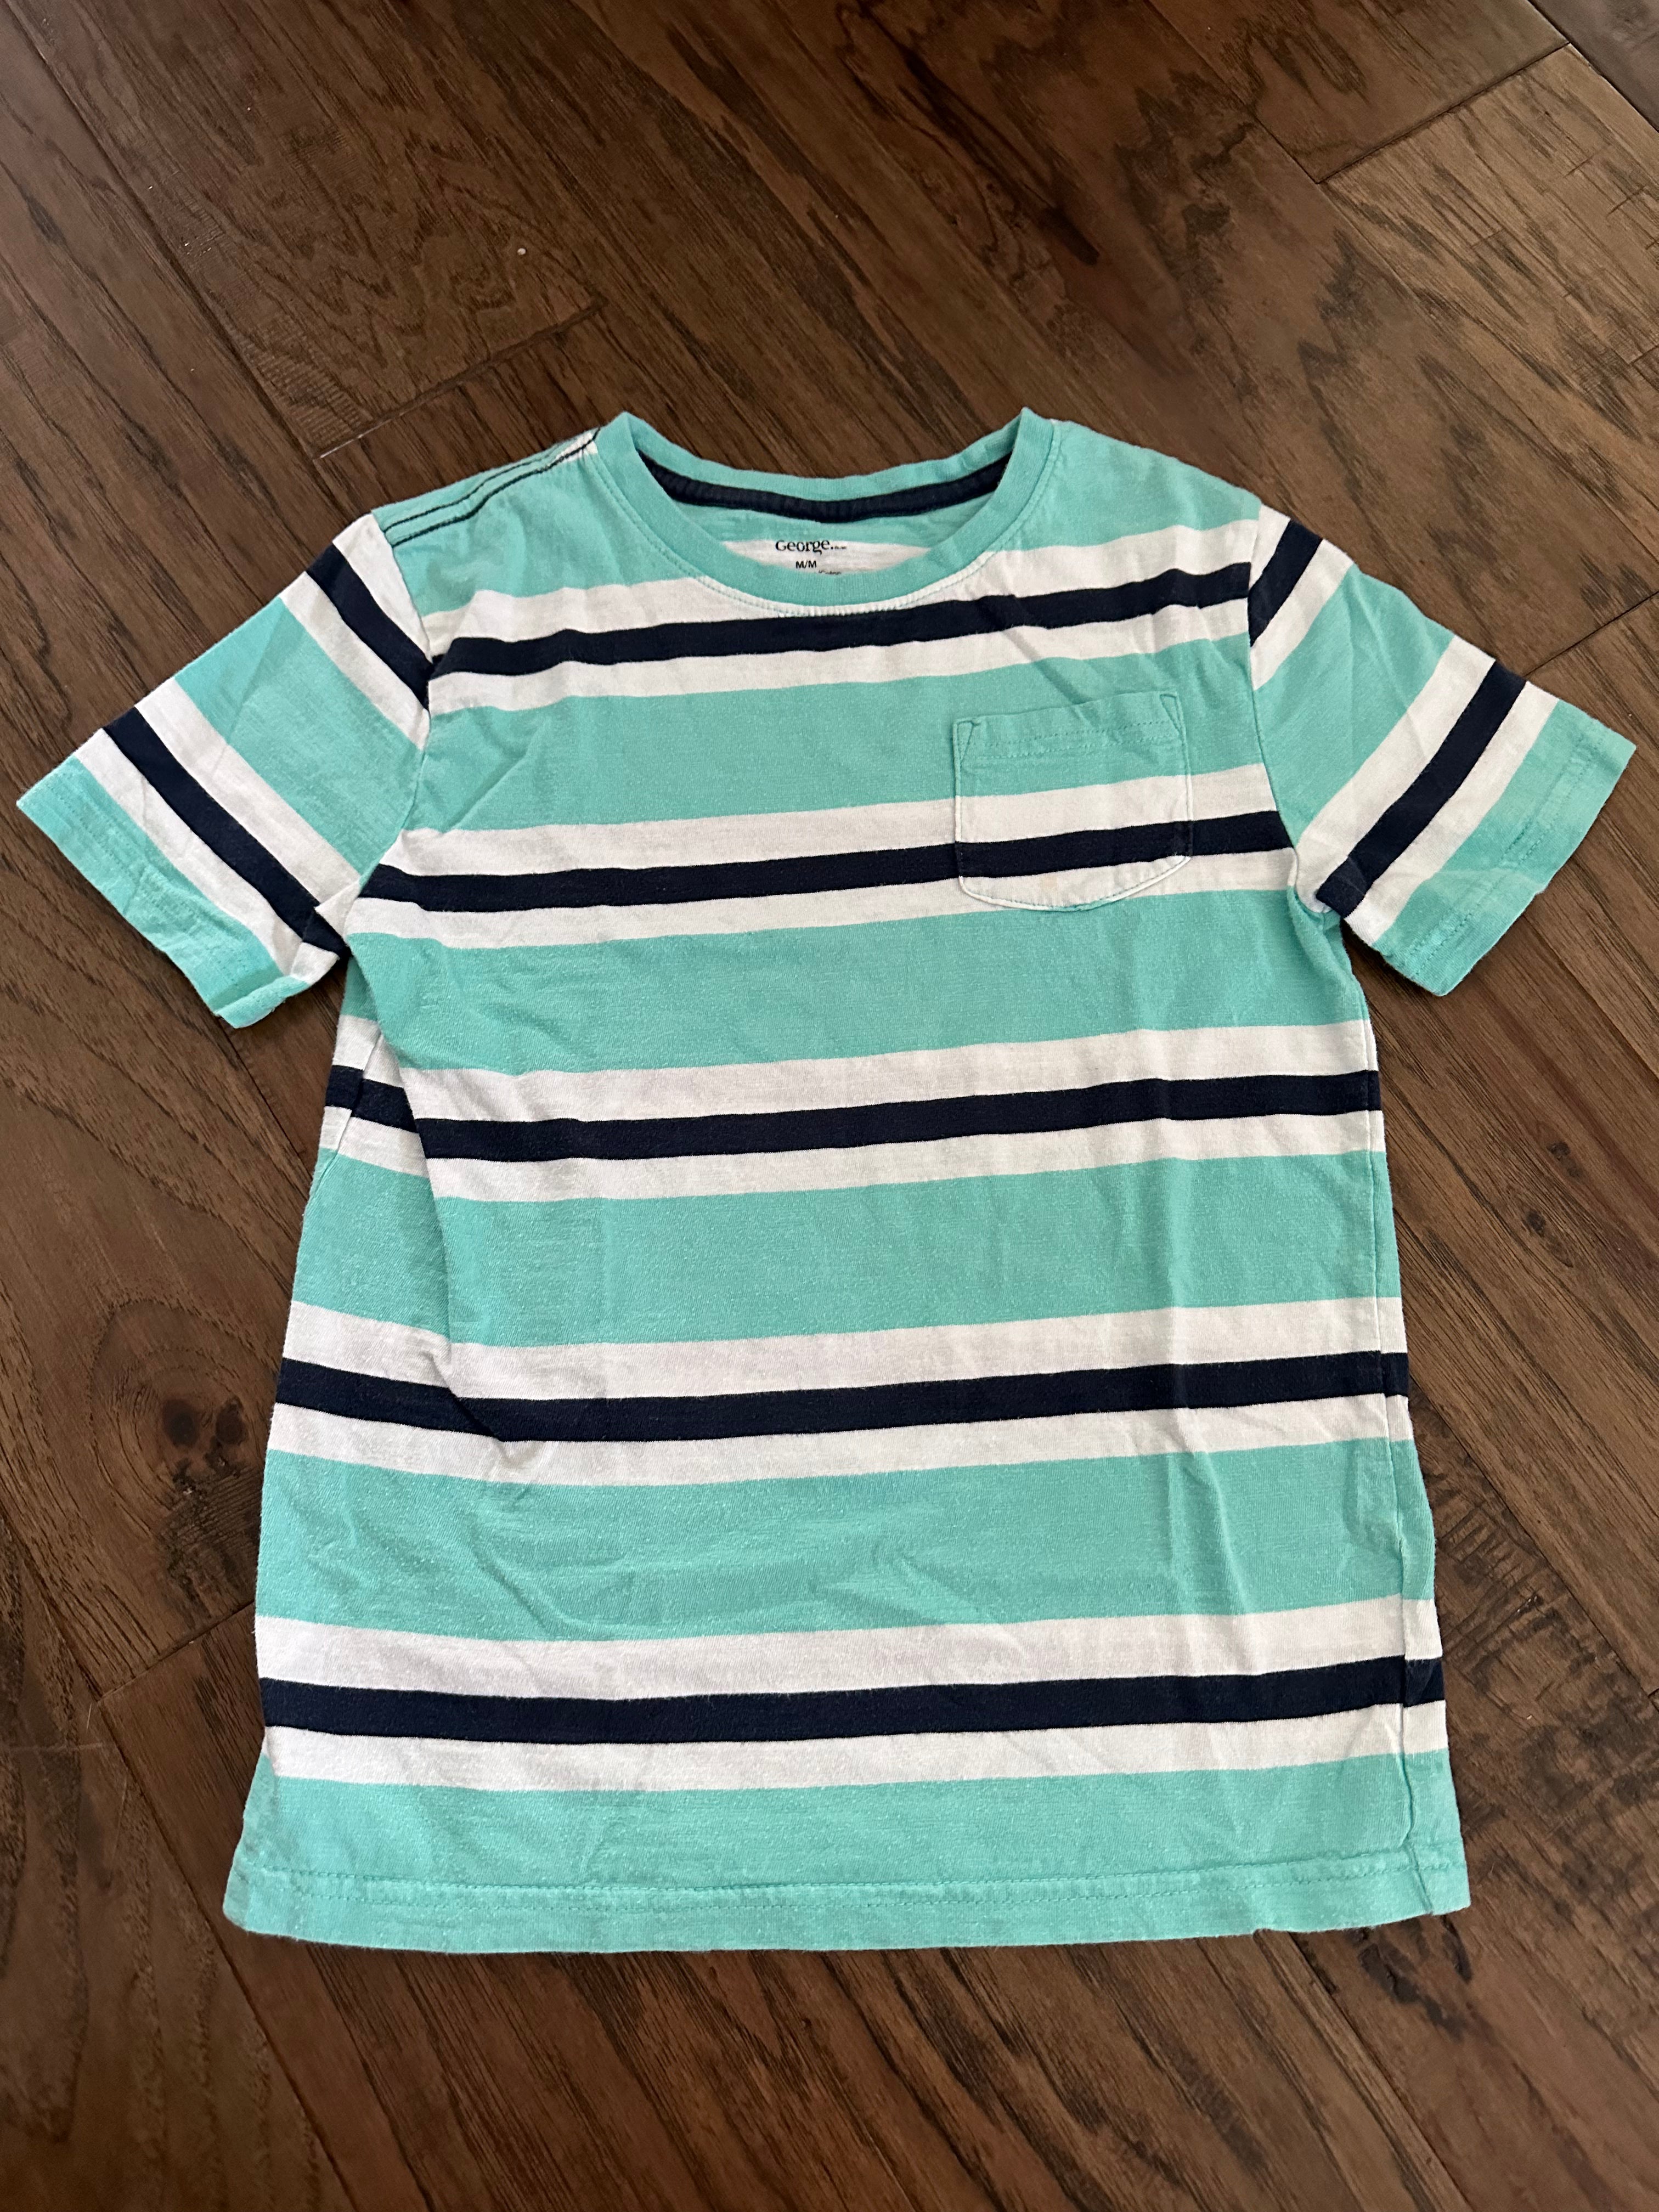 Boys Medium Blue Striped Shirt